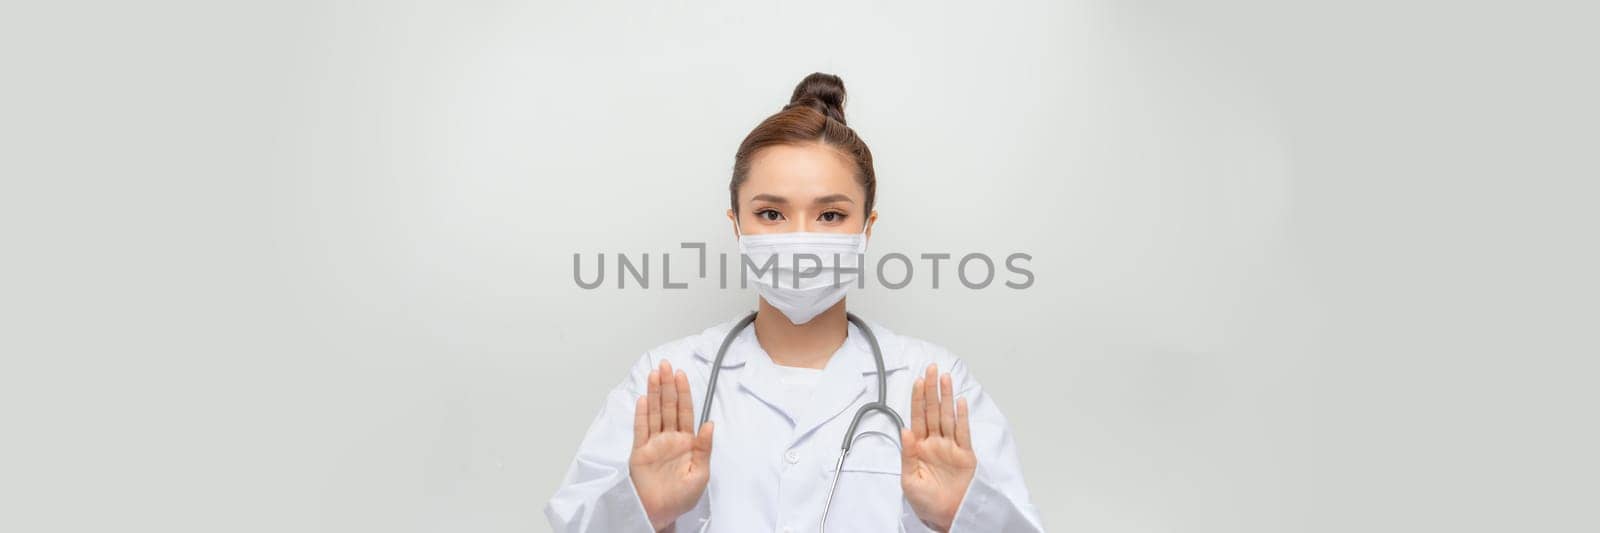 beauty female doctor in coat showing stop hand gesture